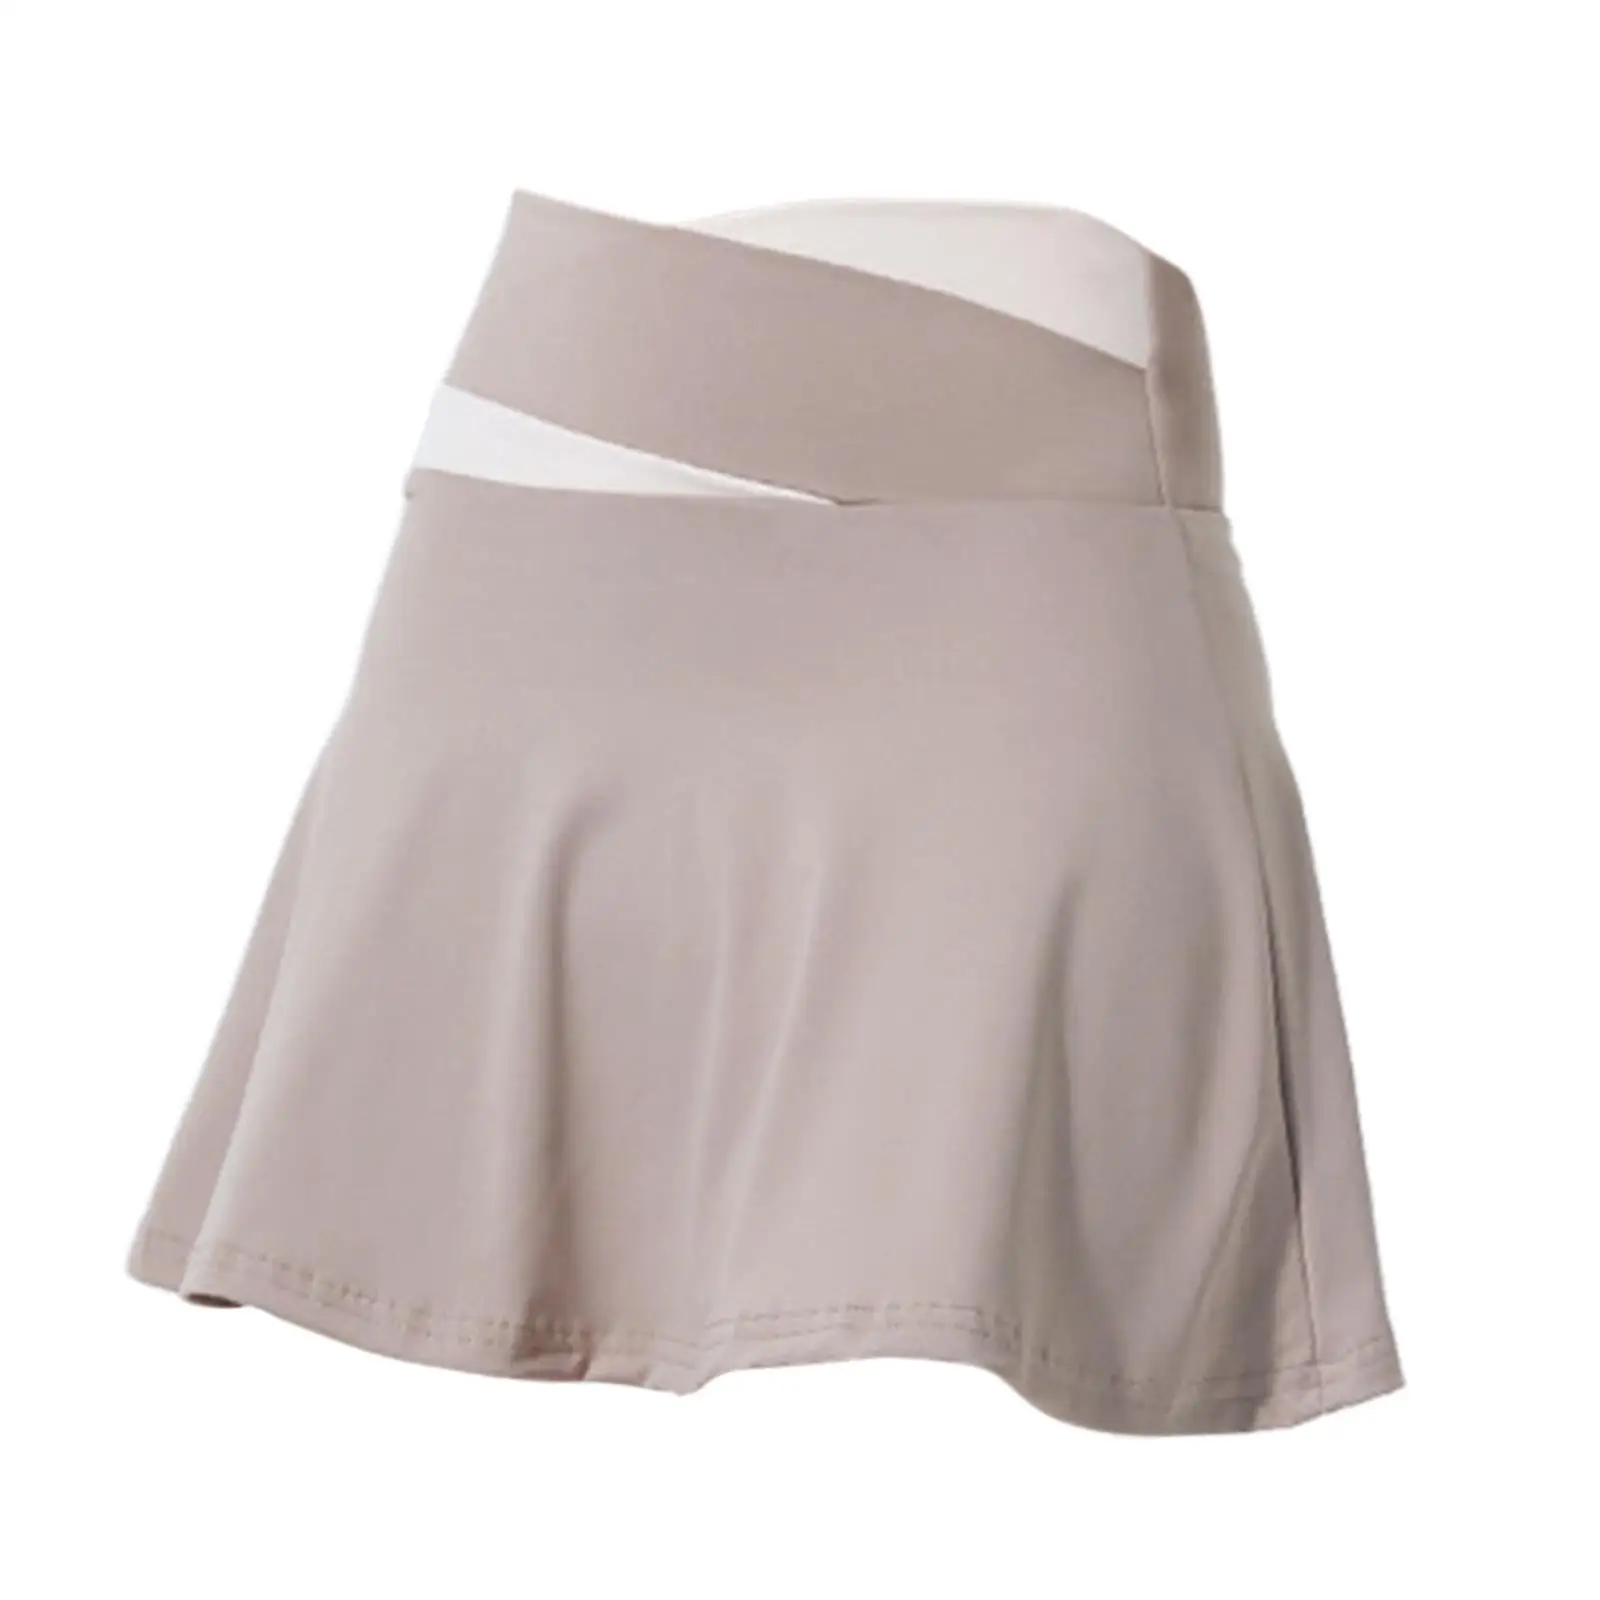 Tennis Skirts Short Skirt Casual Clothes Activewear Streetwear Cute Soft Womens Skirt for Running Jogging Workout Tennis Sports